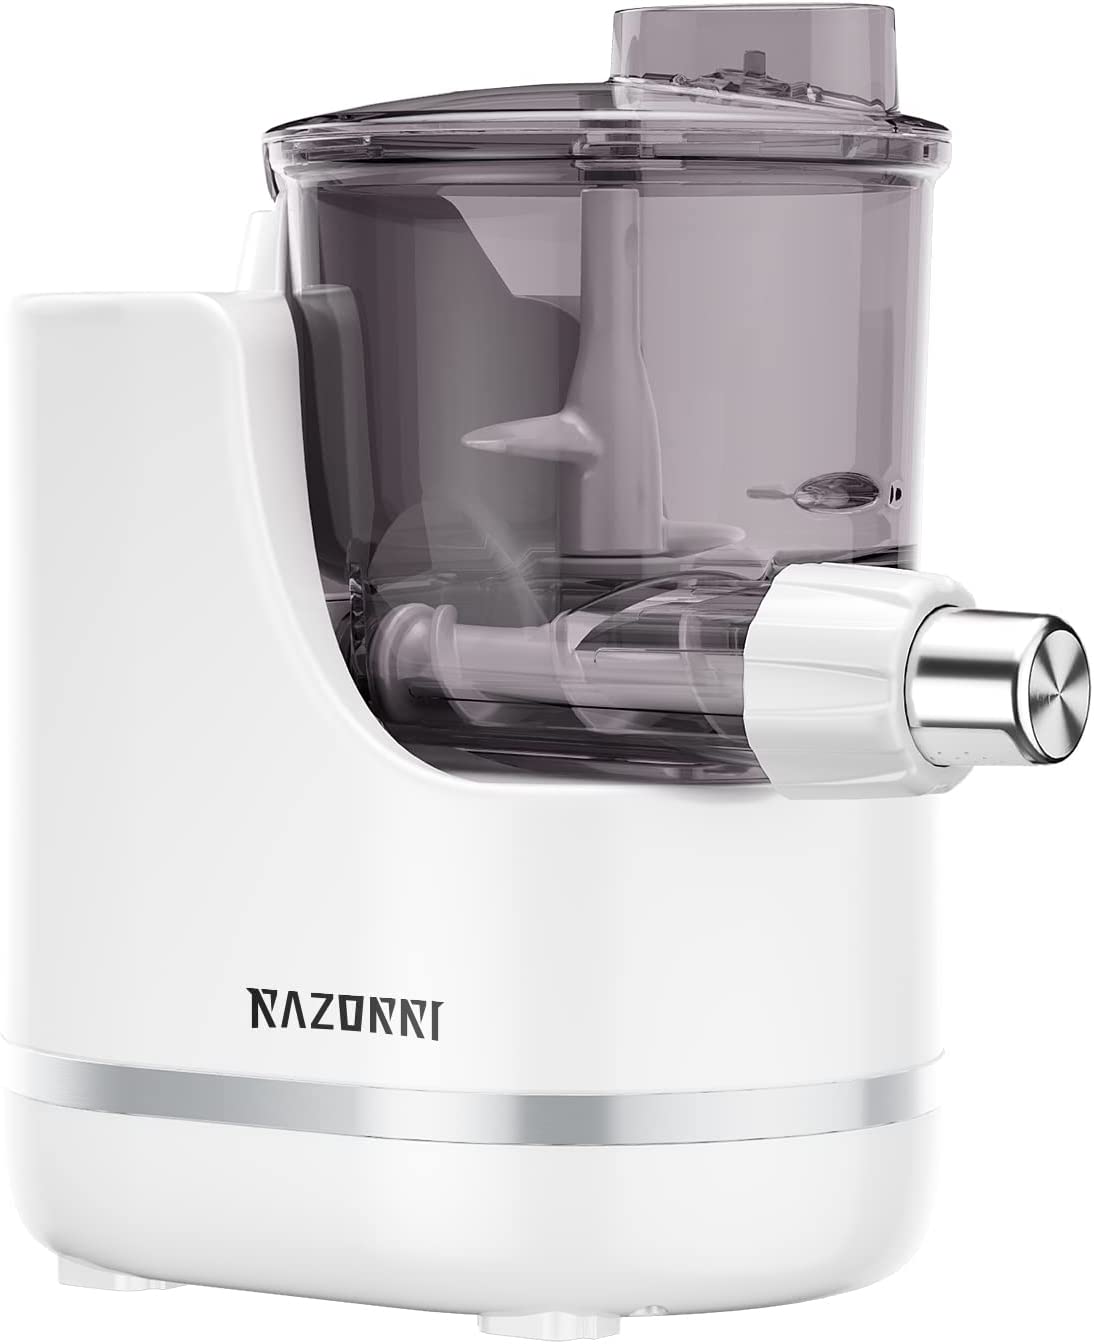 Razorri Ultra-Fast Dishwasher Safe Pasta Maker